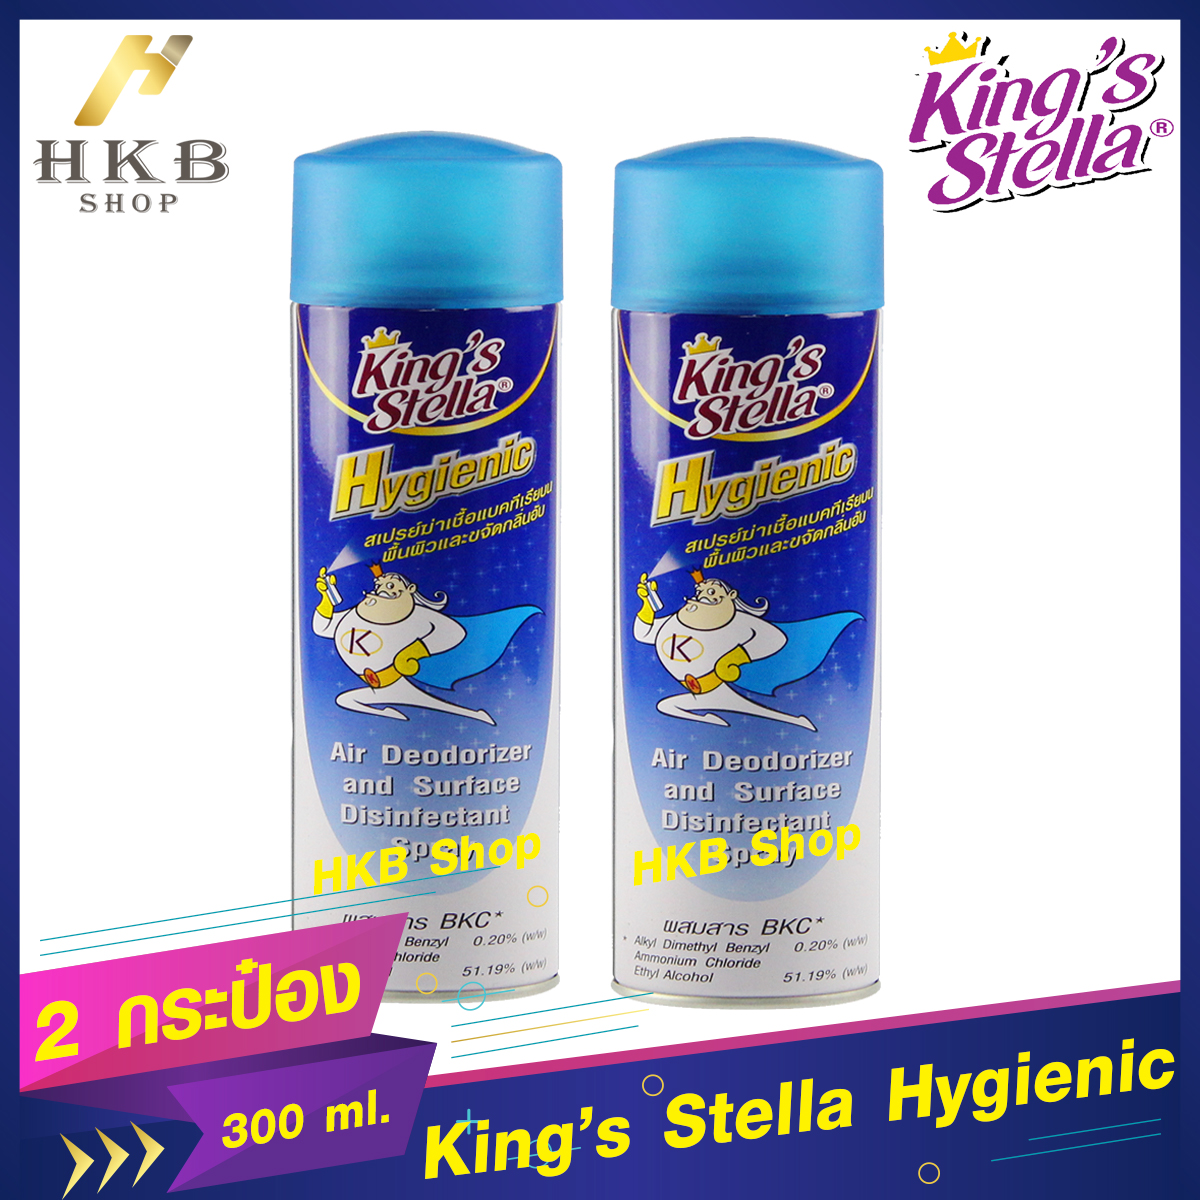 ⚡️2กระป๋อง/300ml.⚡️ King's Stella Hygienic คิงส์ สเตลล่า ไฮจีนิค สเปรย์ฆ่าเชื้อแบคทีเรียและขจัดกลิ่นอับ By HKB Shop